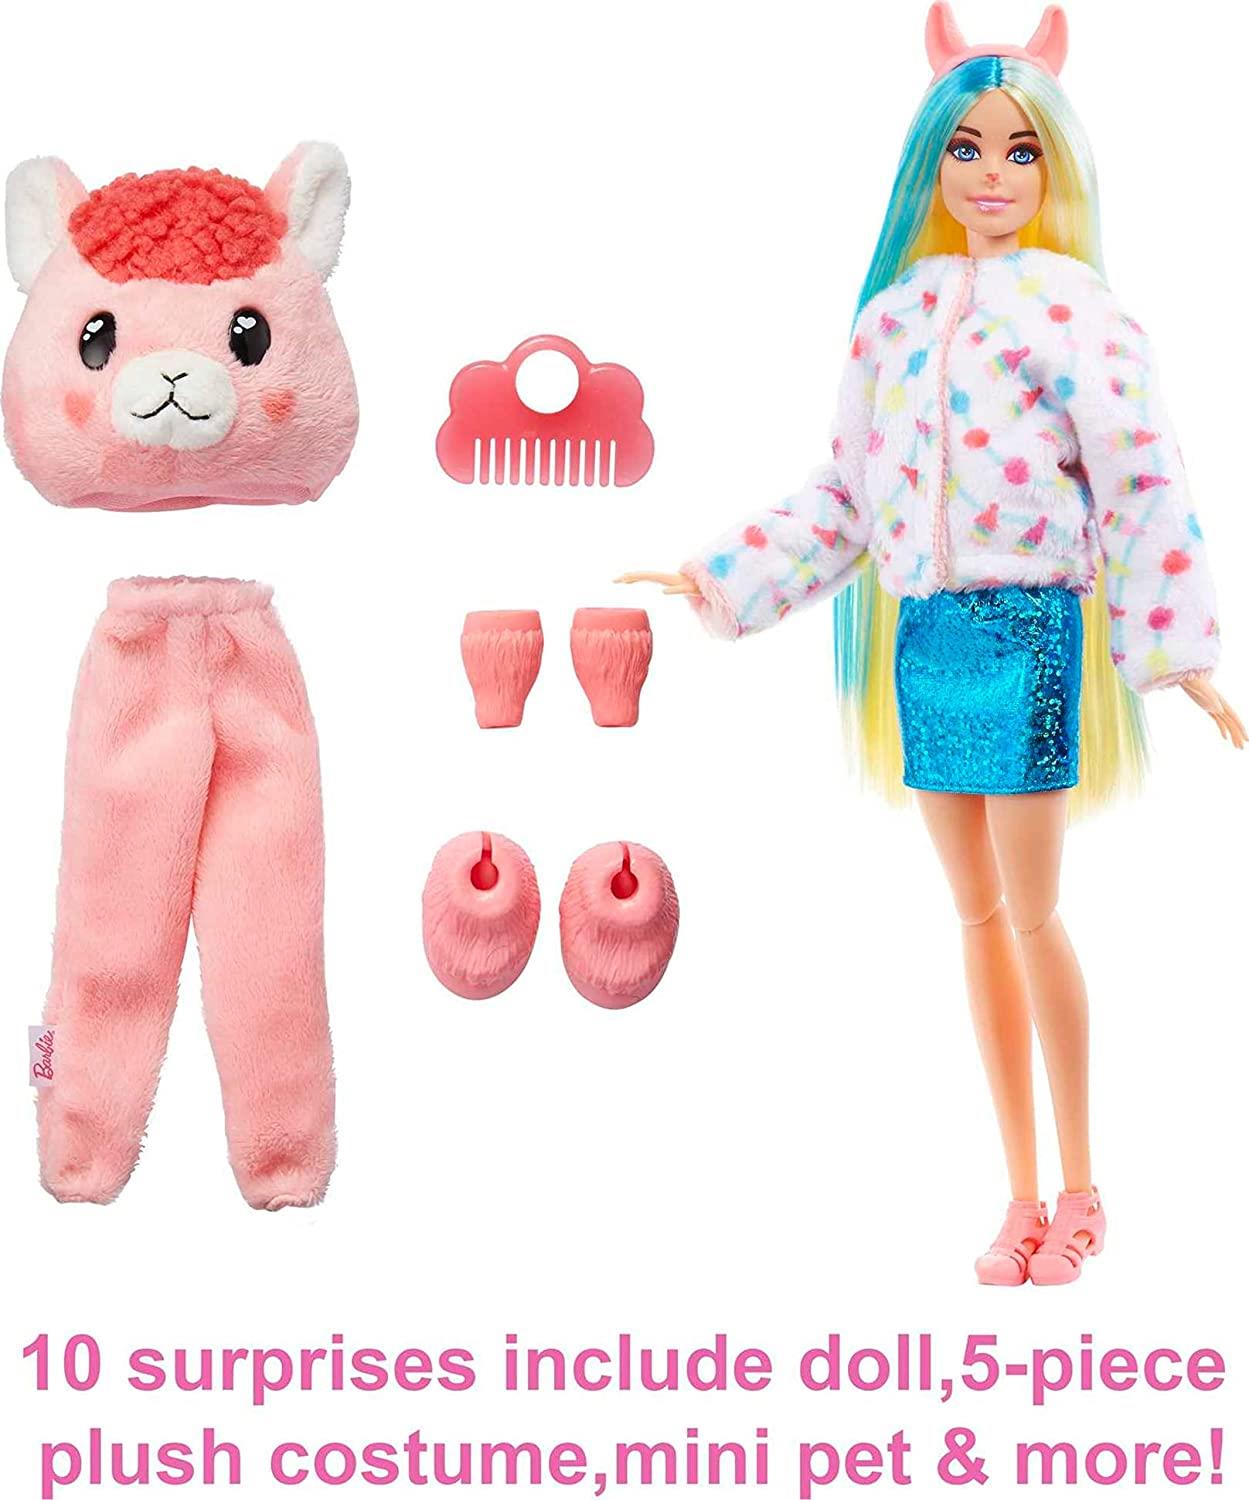 Barbie Cutie Reveal Doll with Llama Plush by BarbieThe Magic Toy Shop